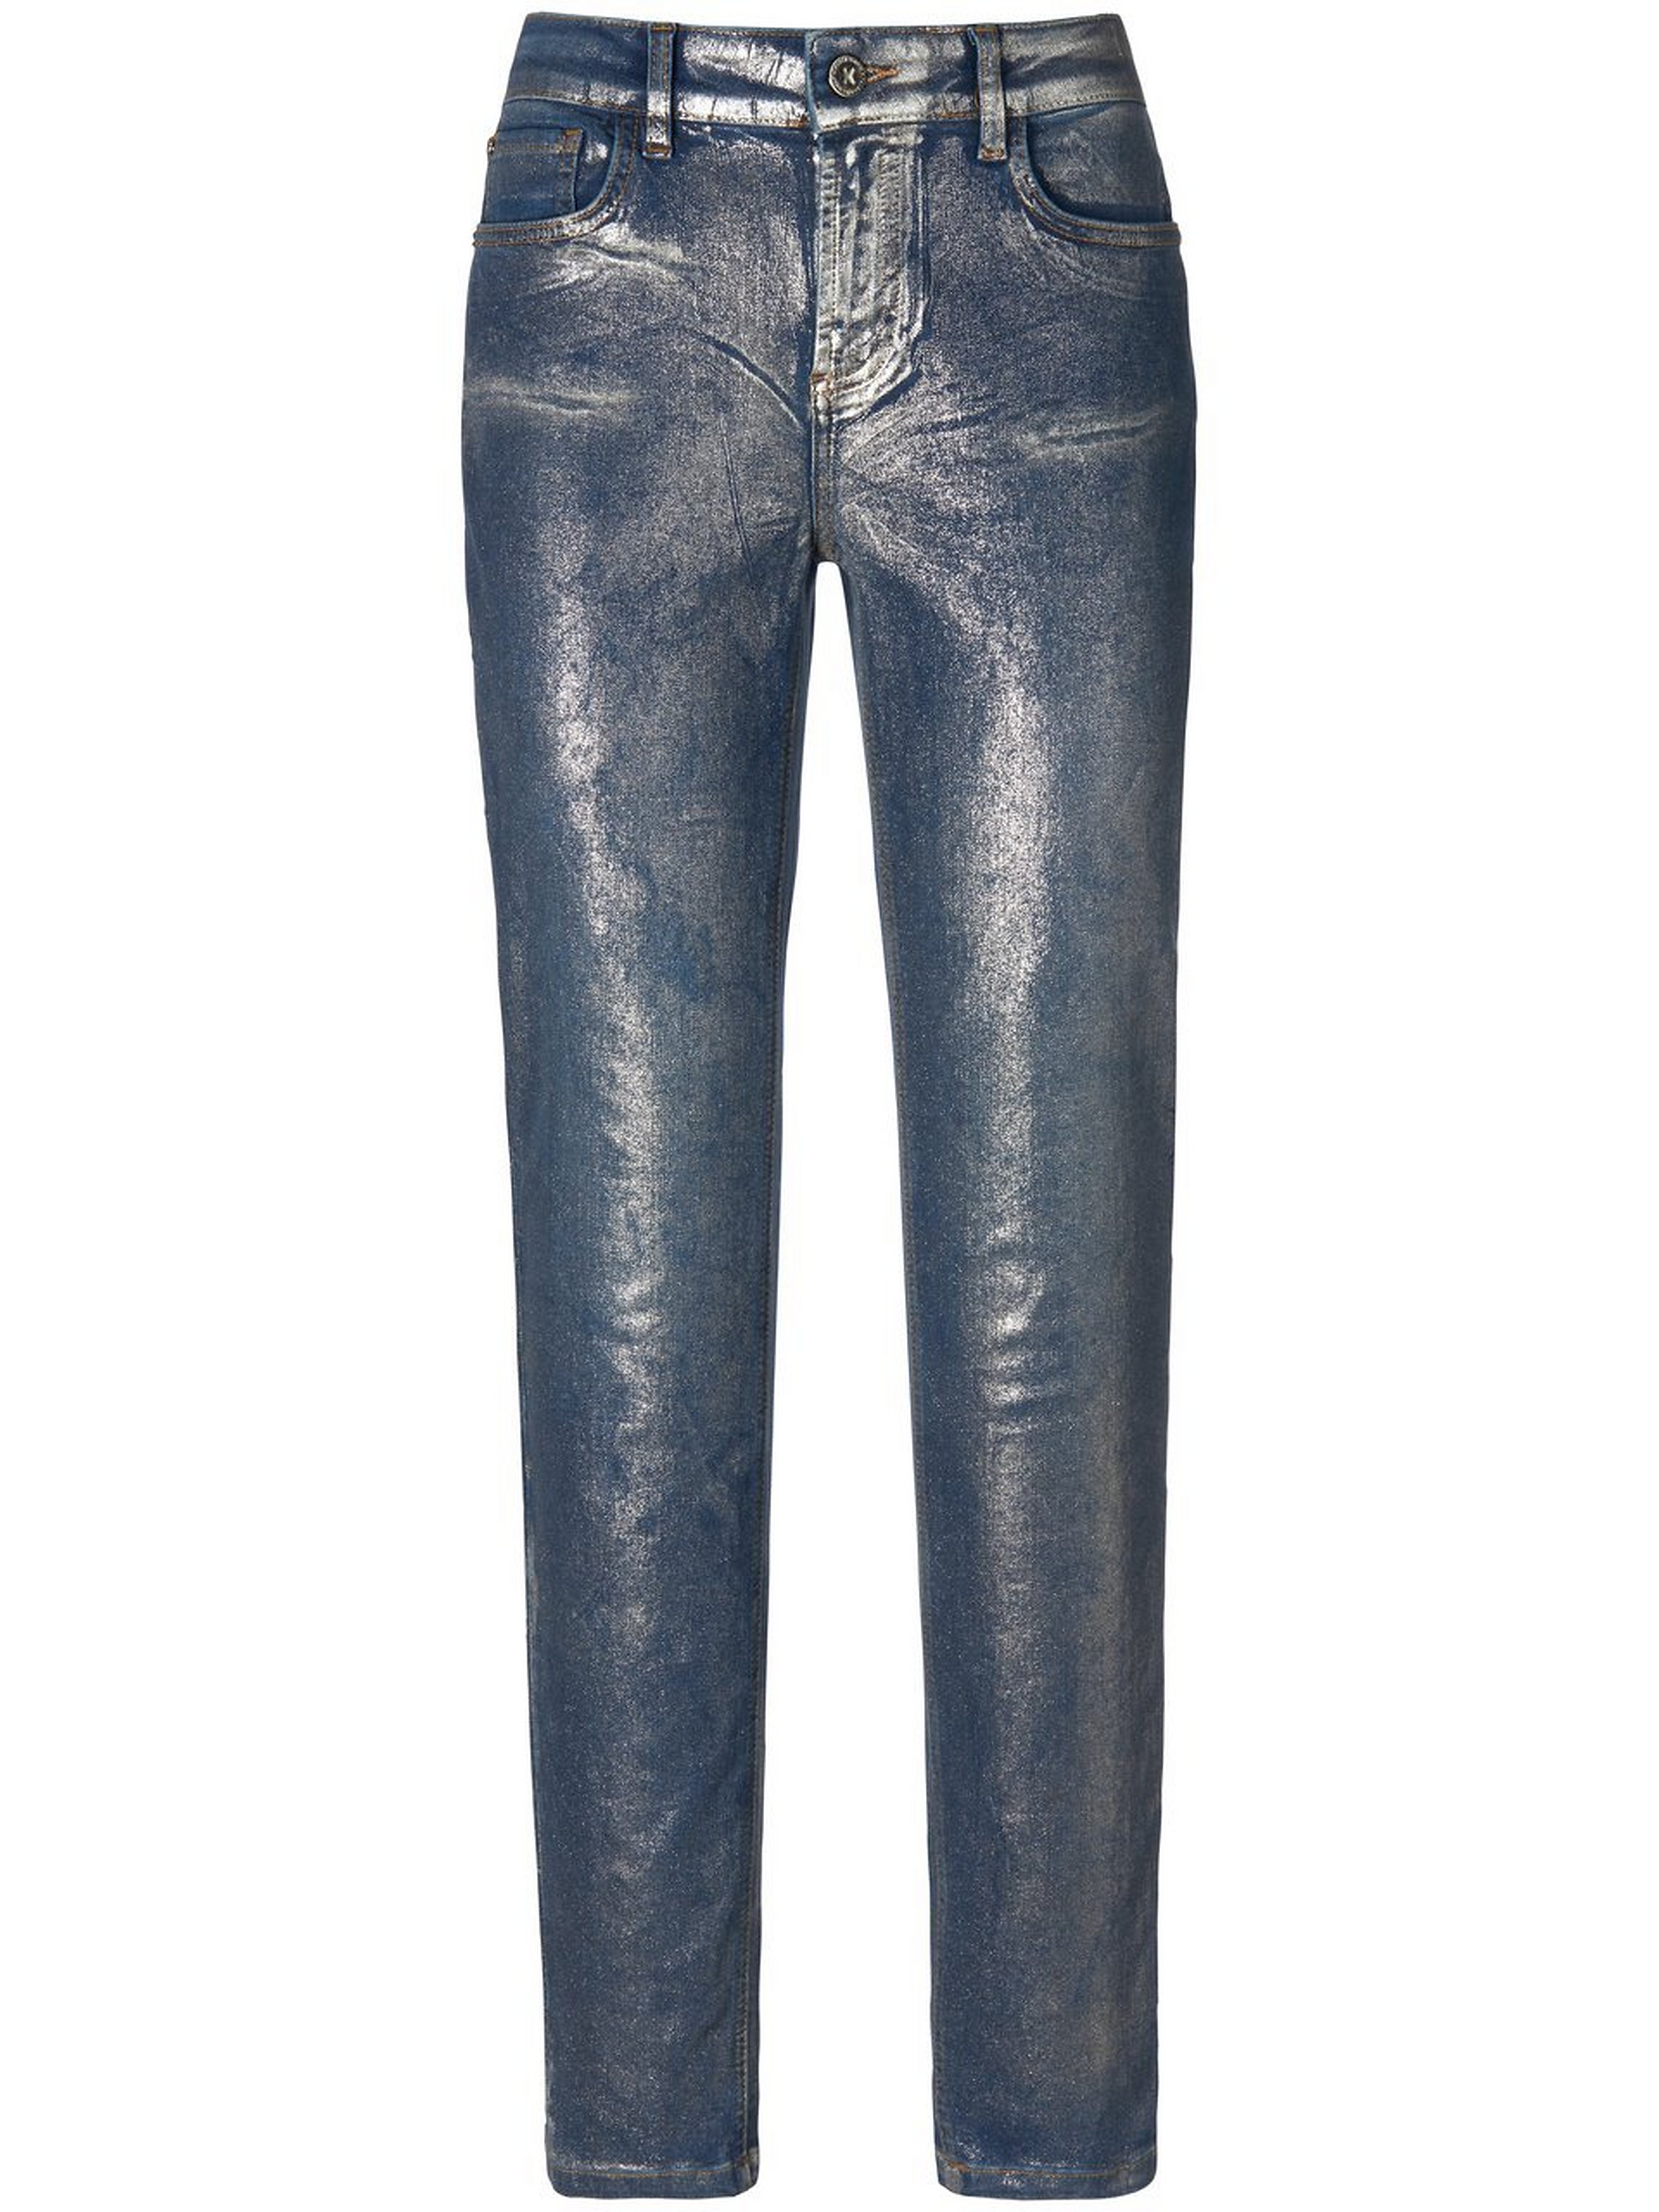 Le jean Slim Fit à 5 poches  TALBOT RUNHOF X PETER HAHN bleu taille 44